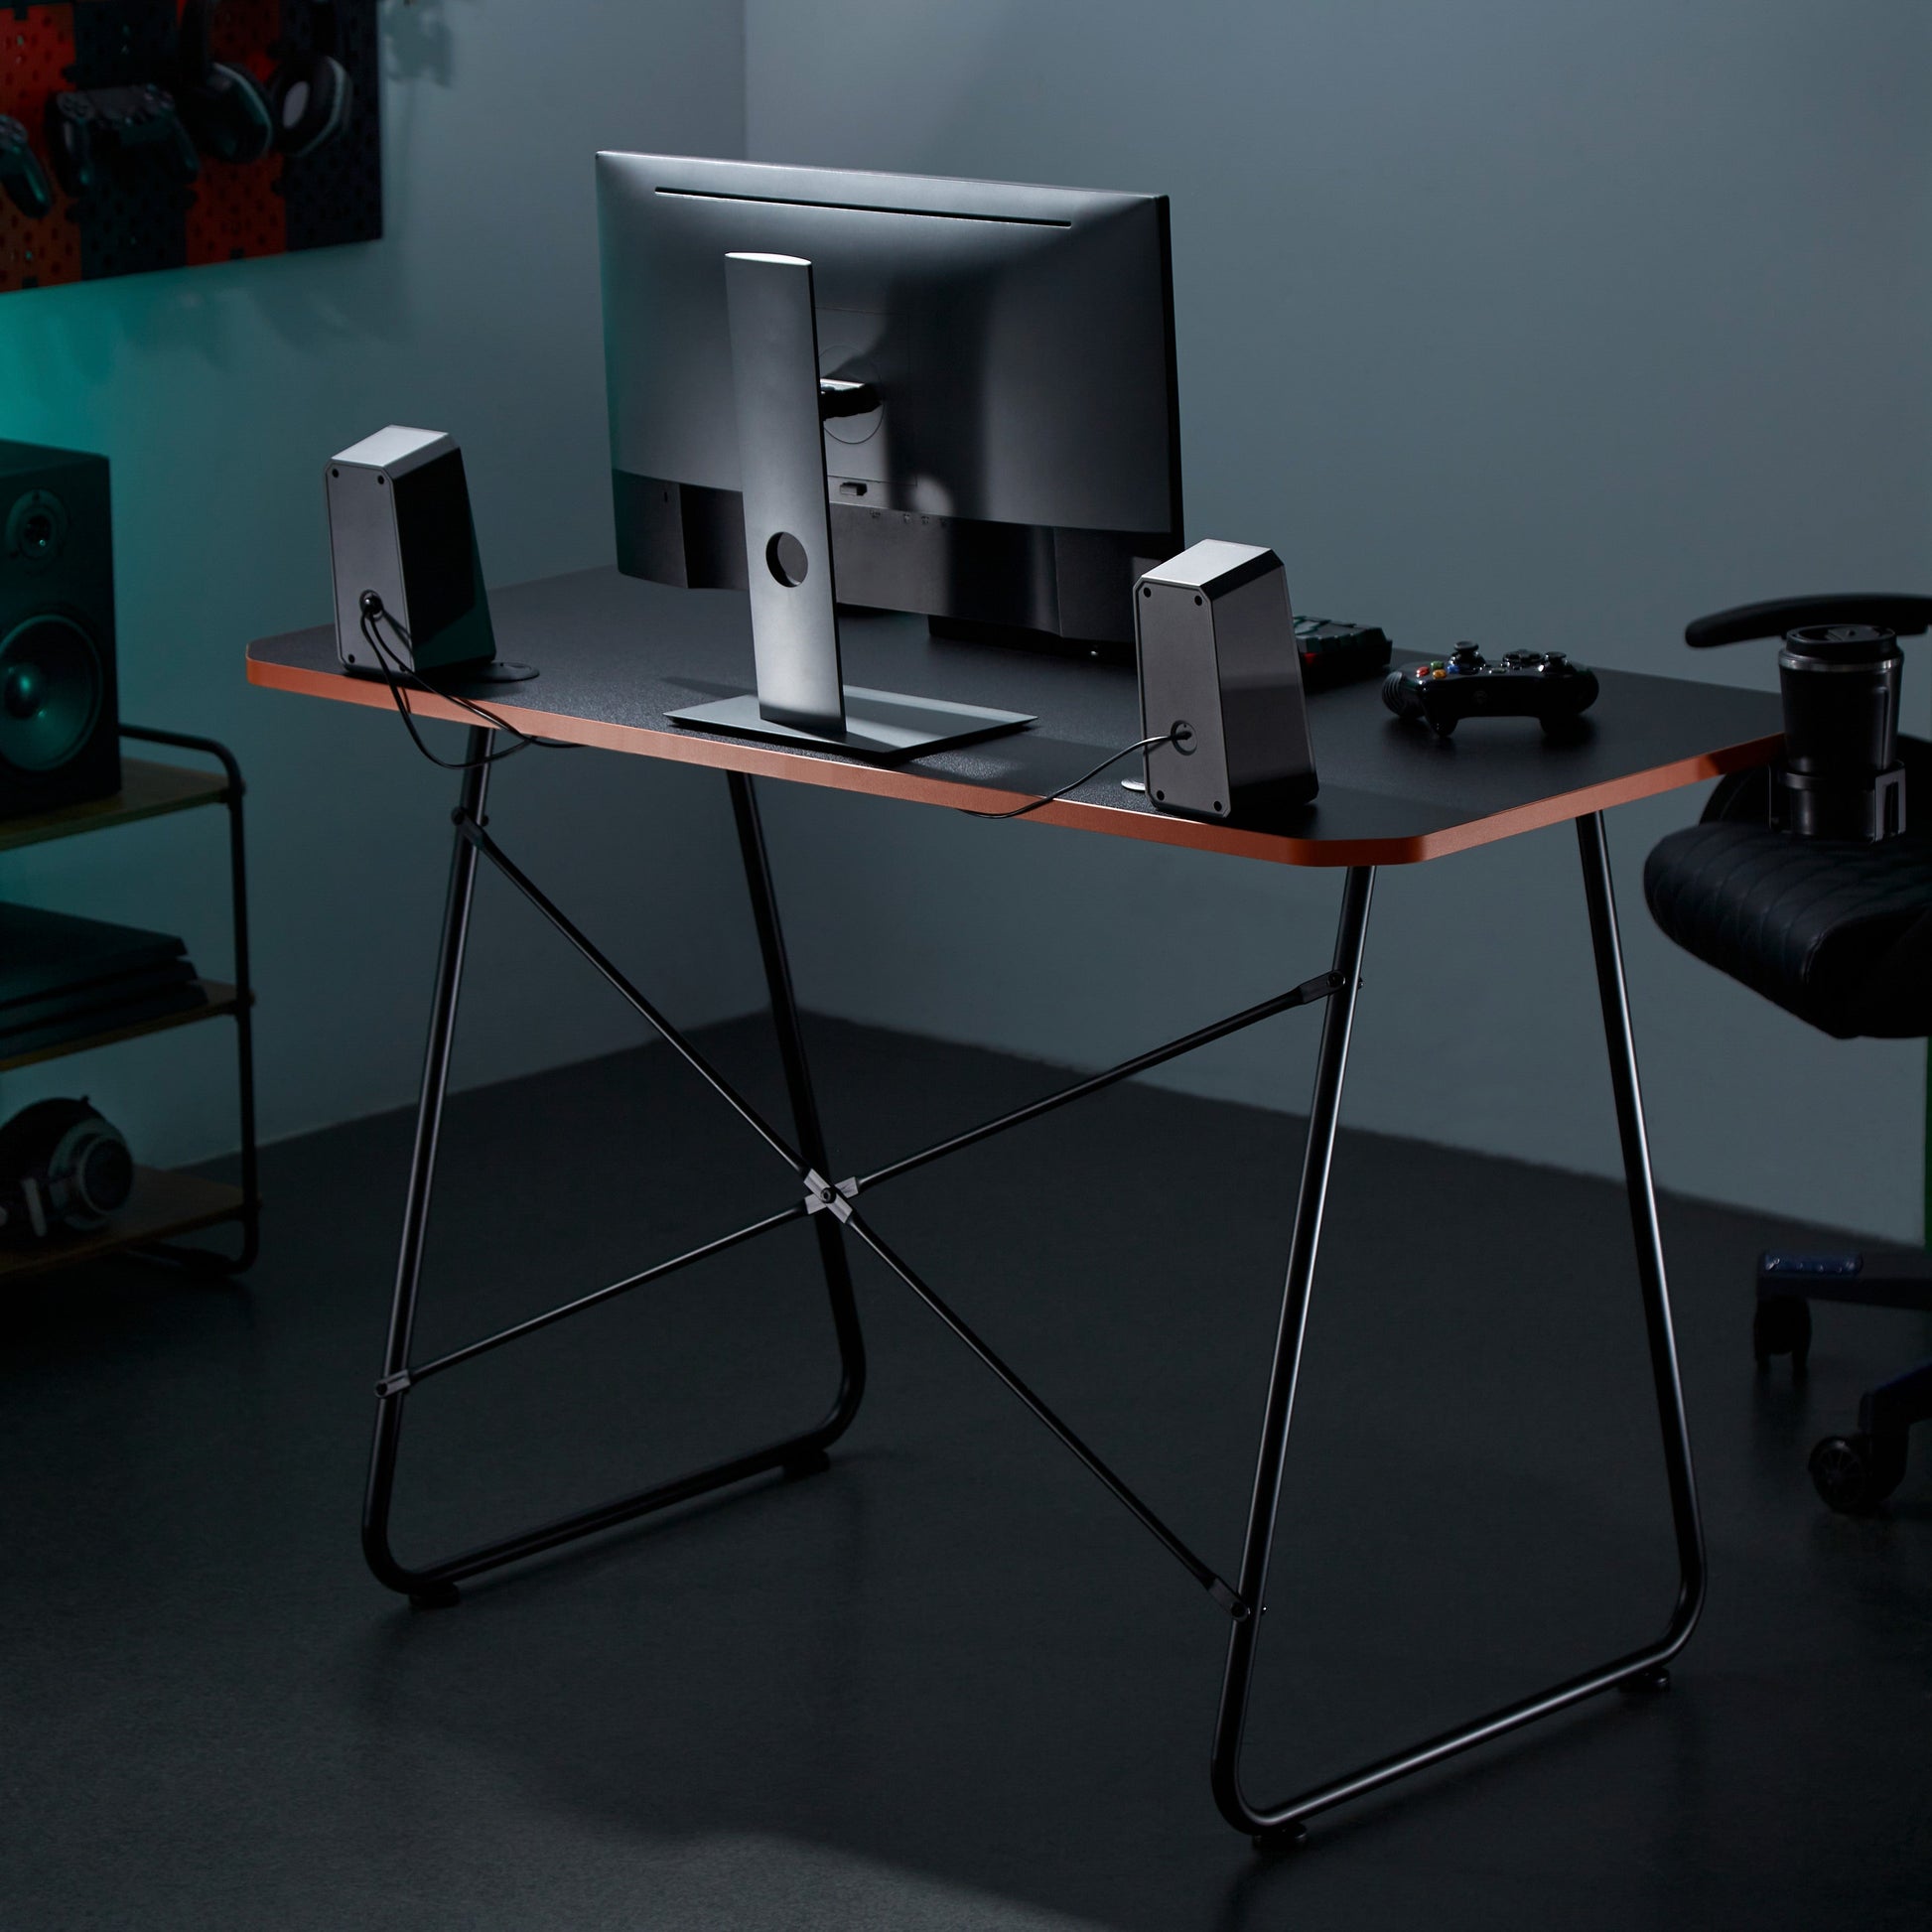 Maplin Gaming Desk with Headphone Hook & Cup Holder - Matte Black & Orange - maplin.co.uk